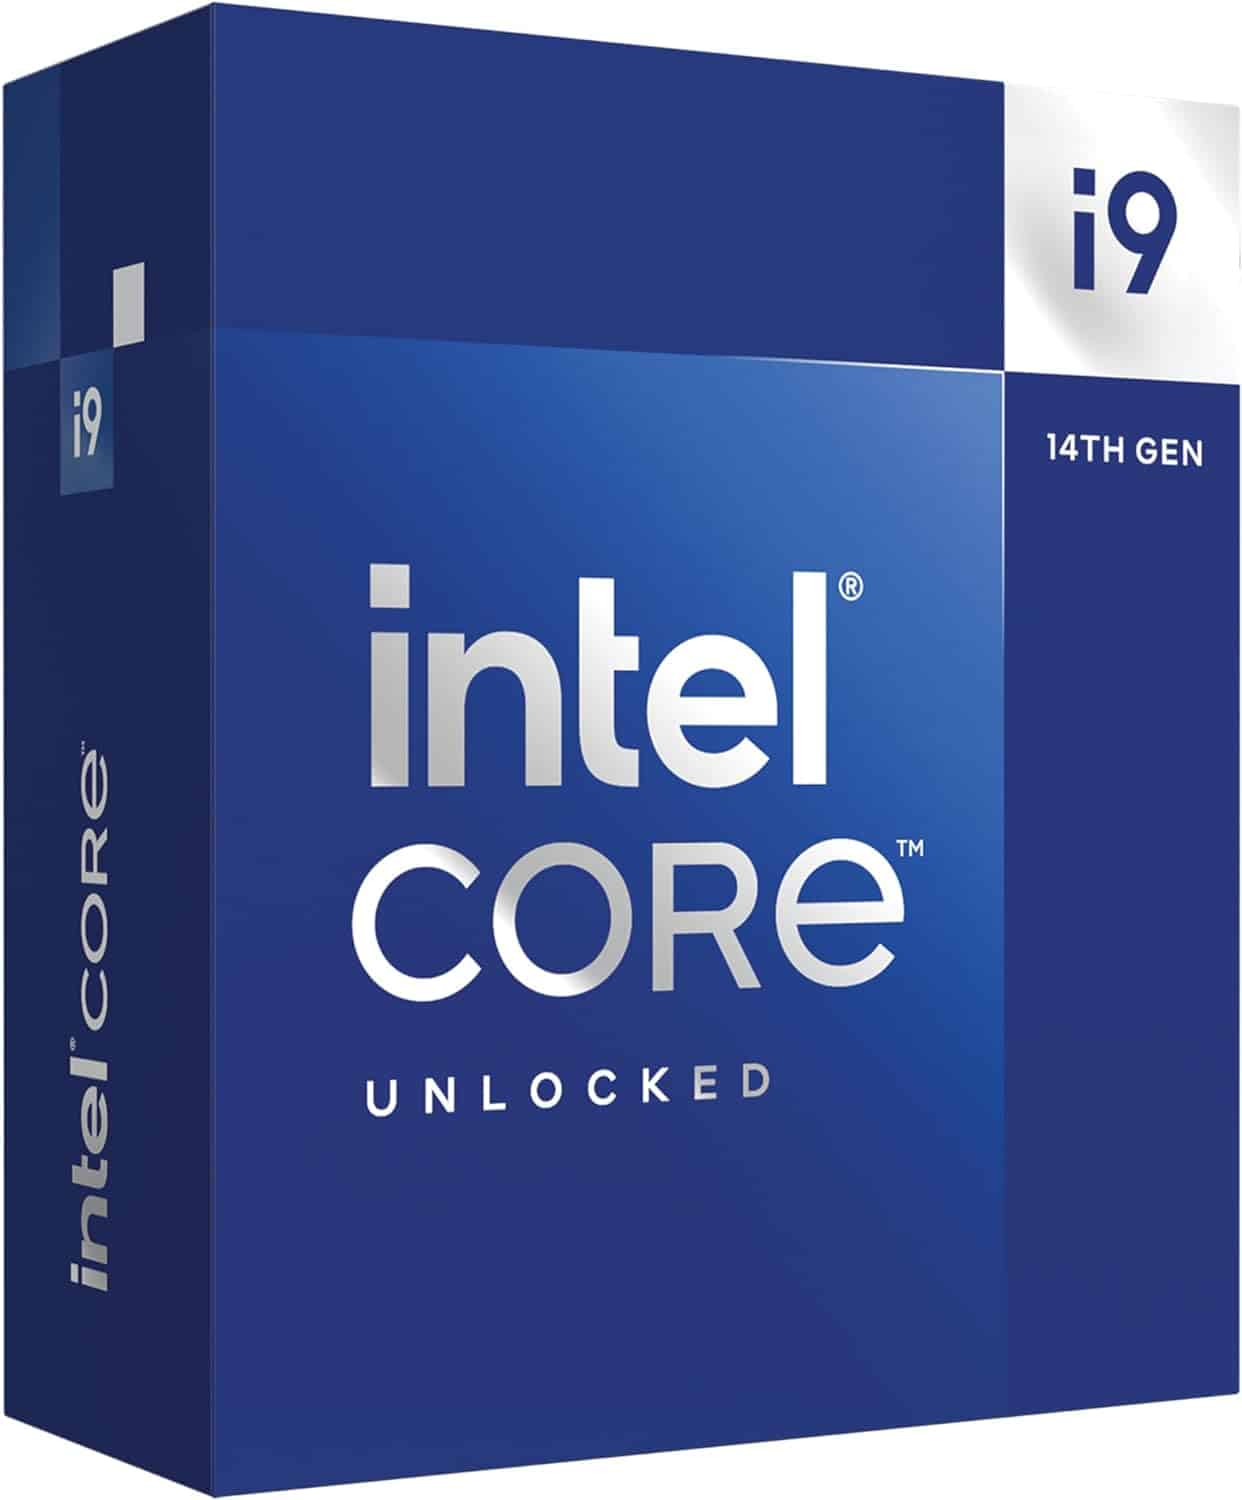 Intel Core i9-14900K unlocked box.